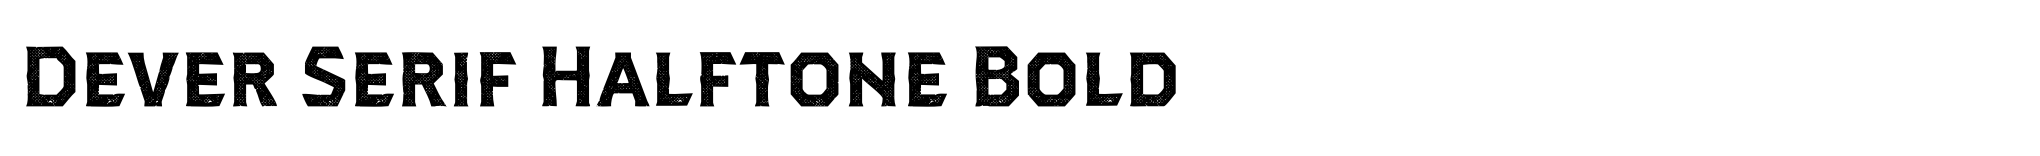 Dever Serif Halftone Bold image